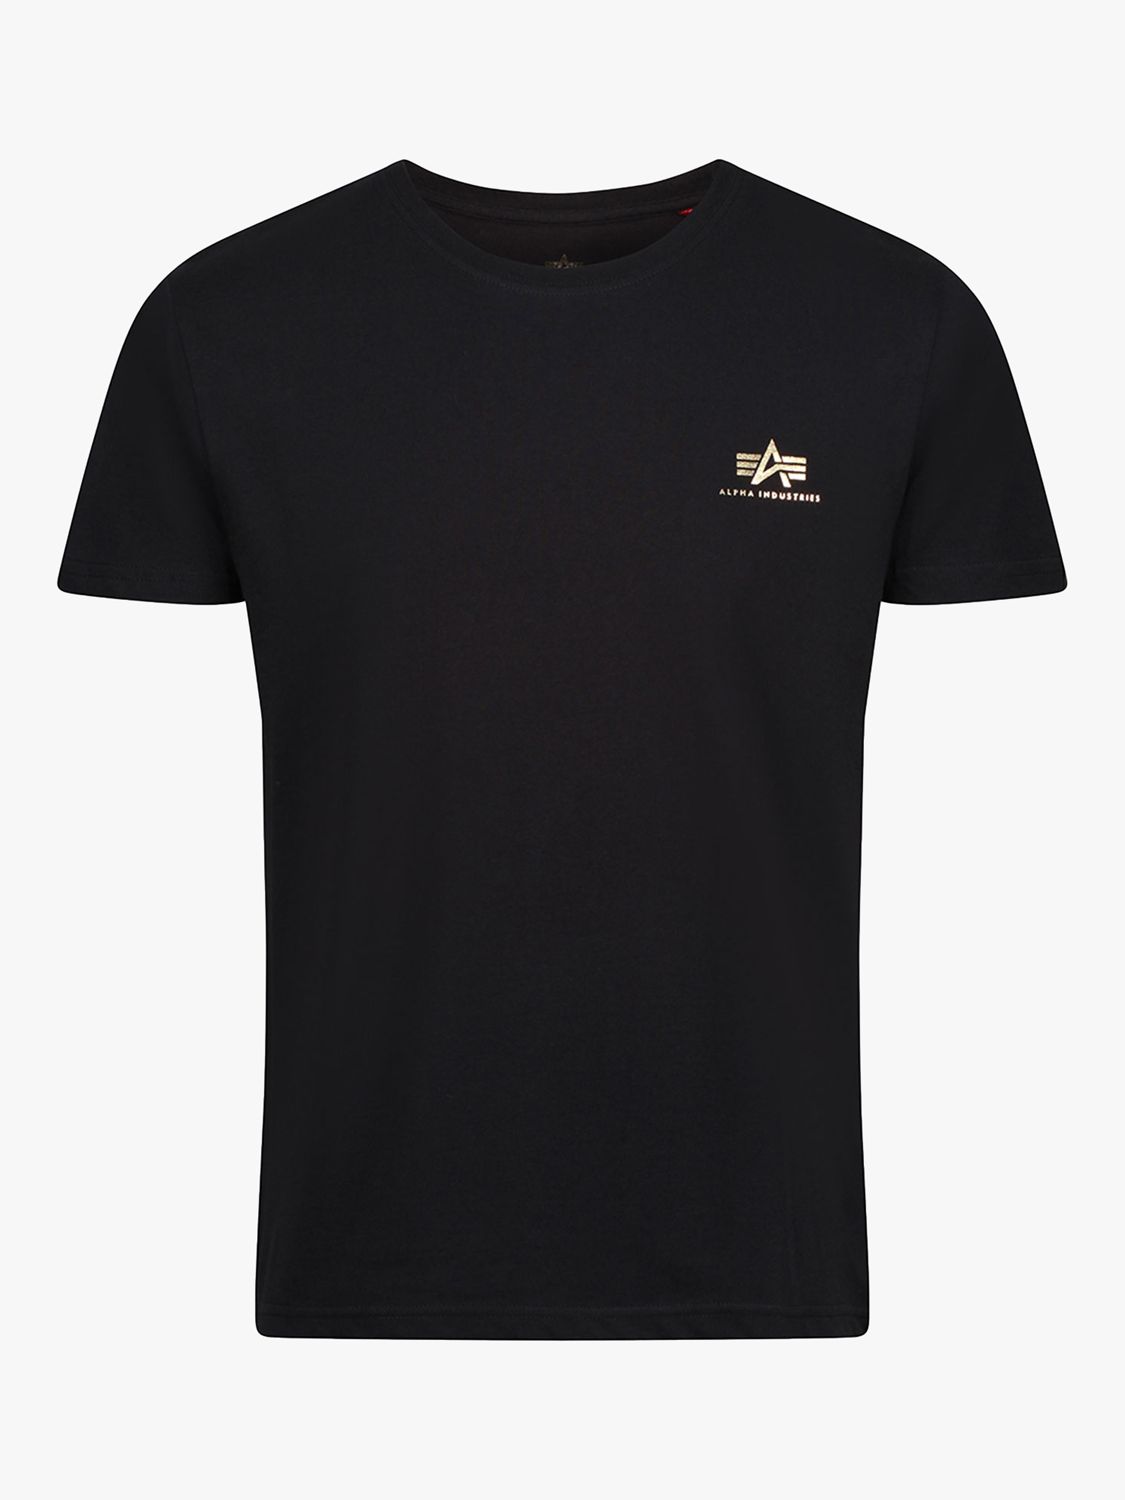 Alpha Industries Basic T-Shirt, Black/Gold, S